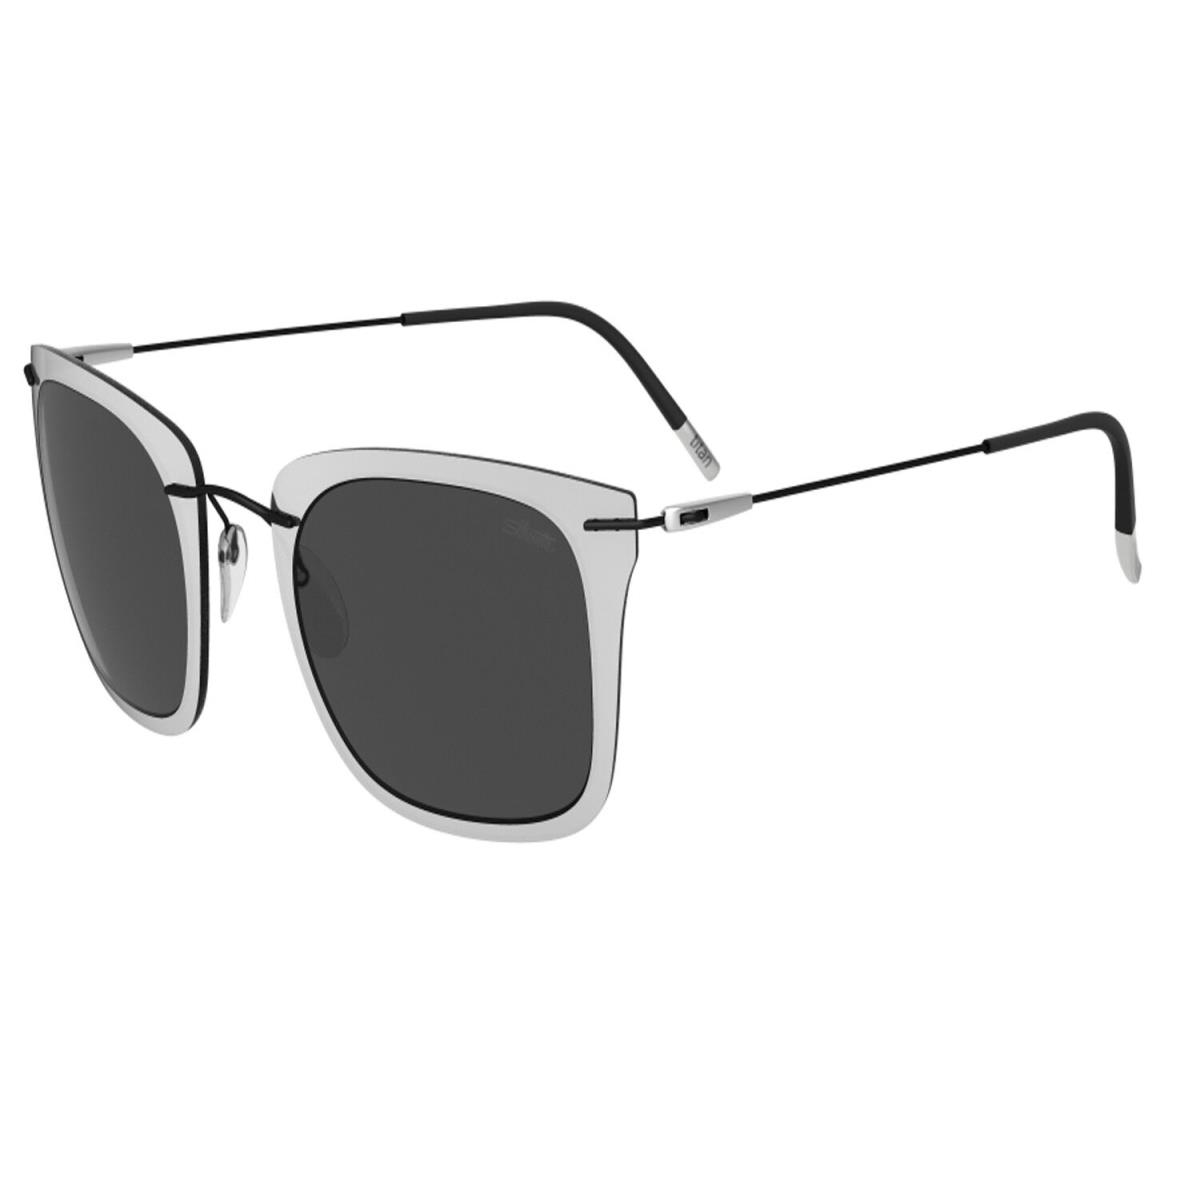 Silhouette Infinity Sunglasses Black Matte / Grey Silver Lenses 8696-75-9040